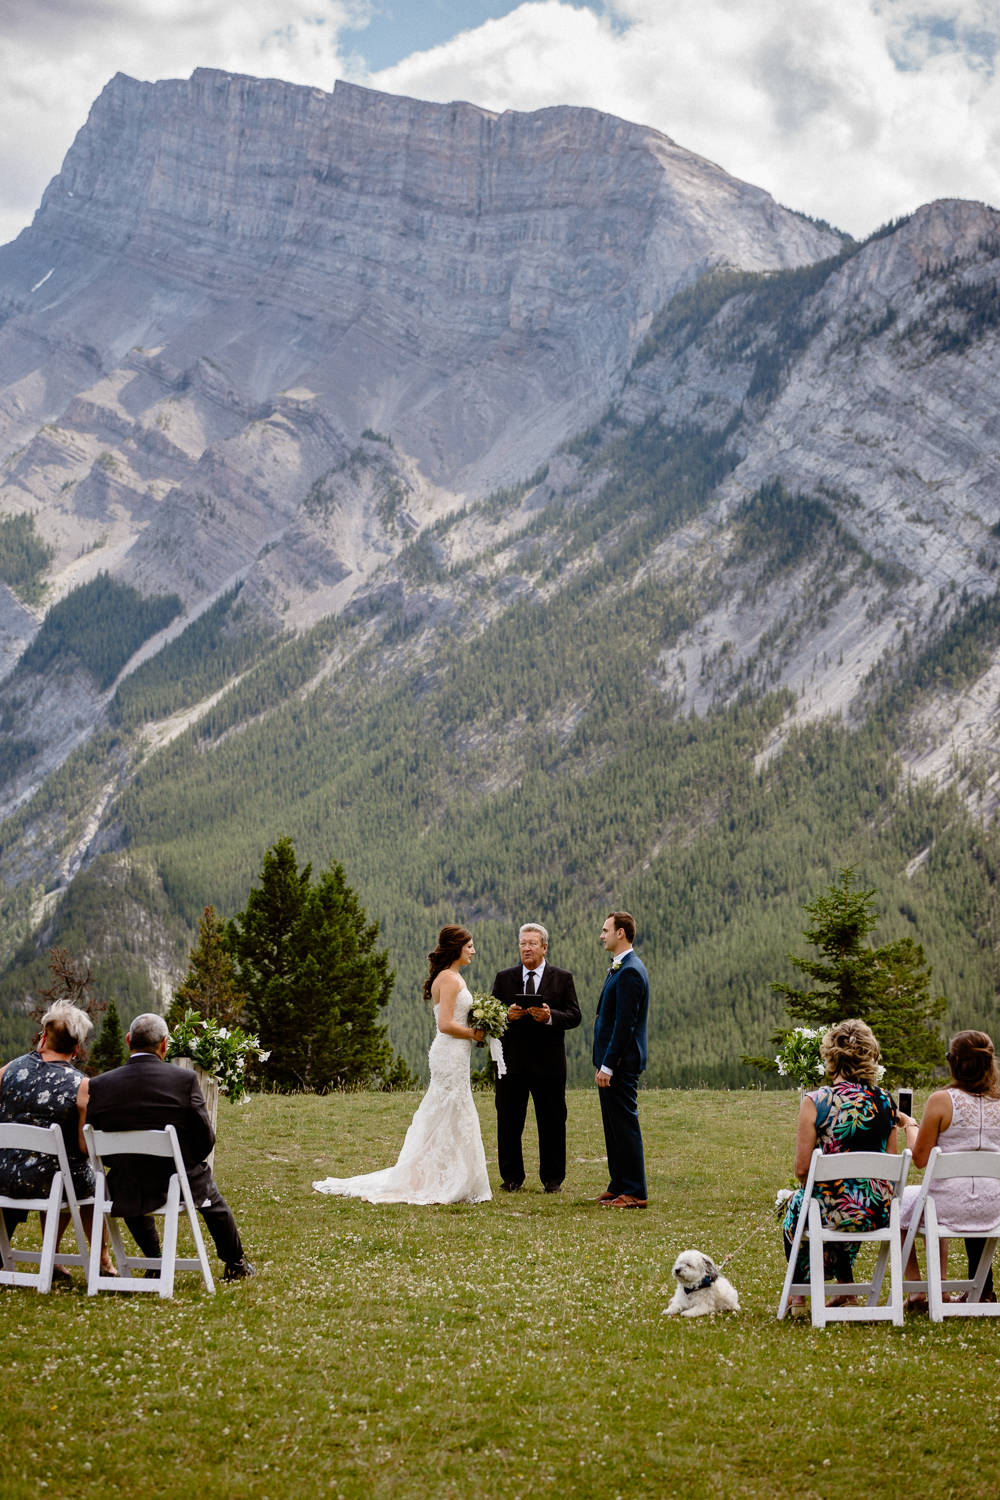 Banff wedding photographers at Tunnel Mountain Reservoir